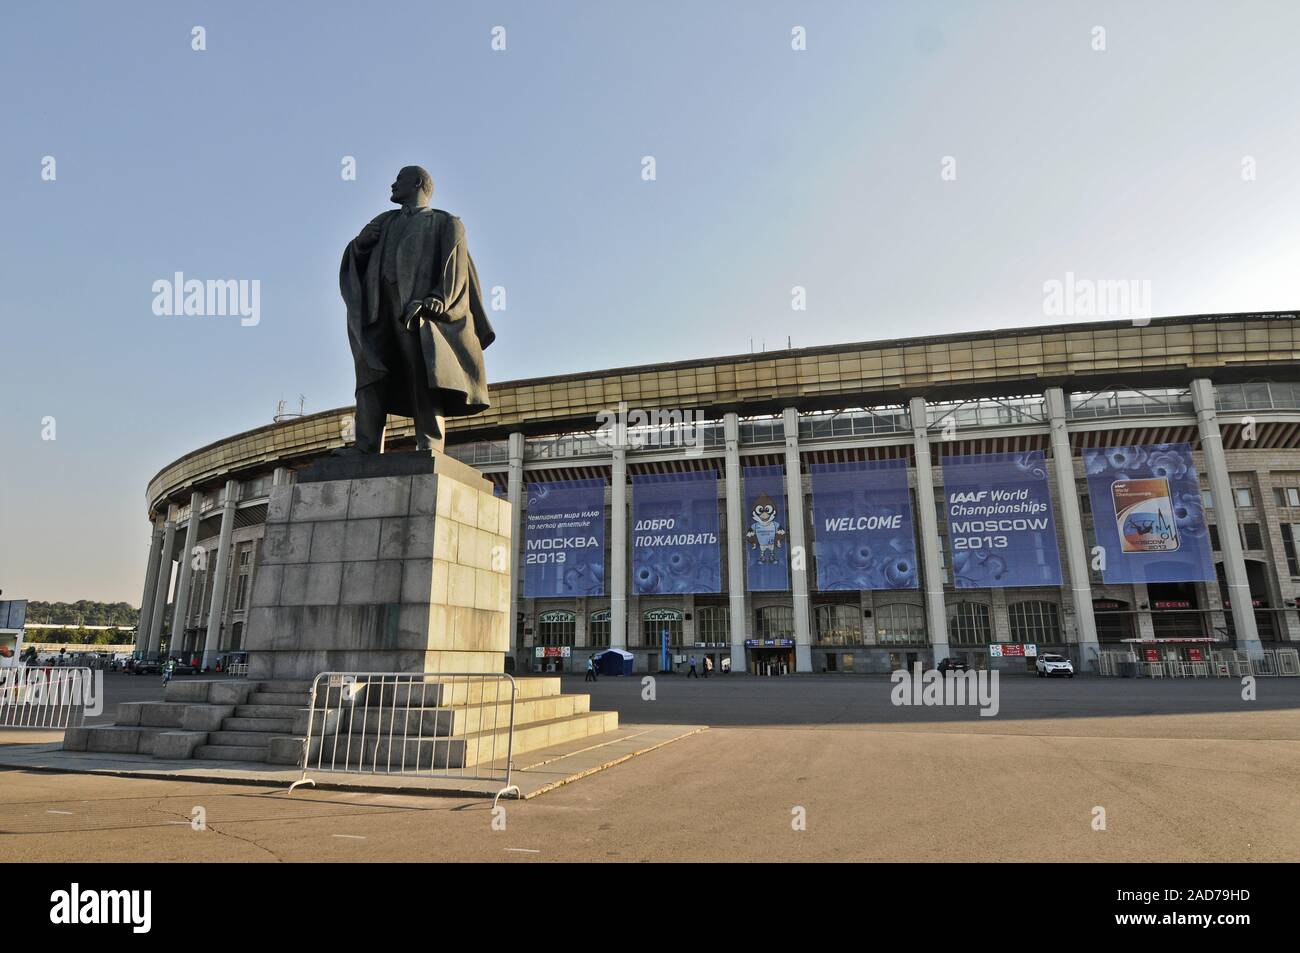 Luzhniki Stadium. IAAF Campionati del Mondo di Mosca 2013 Foto Stock